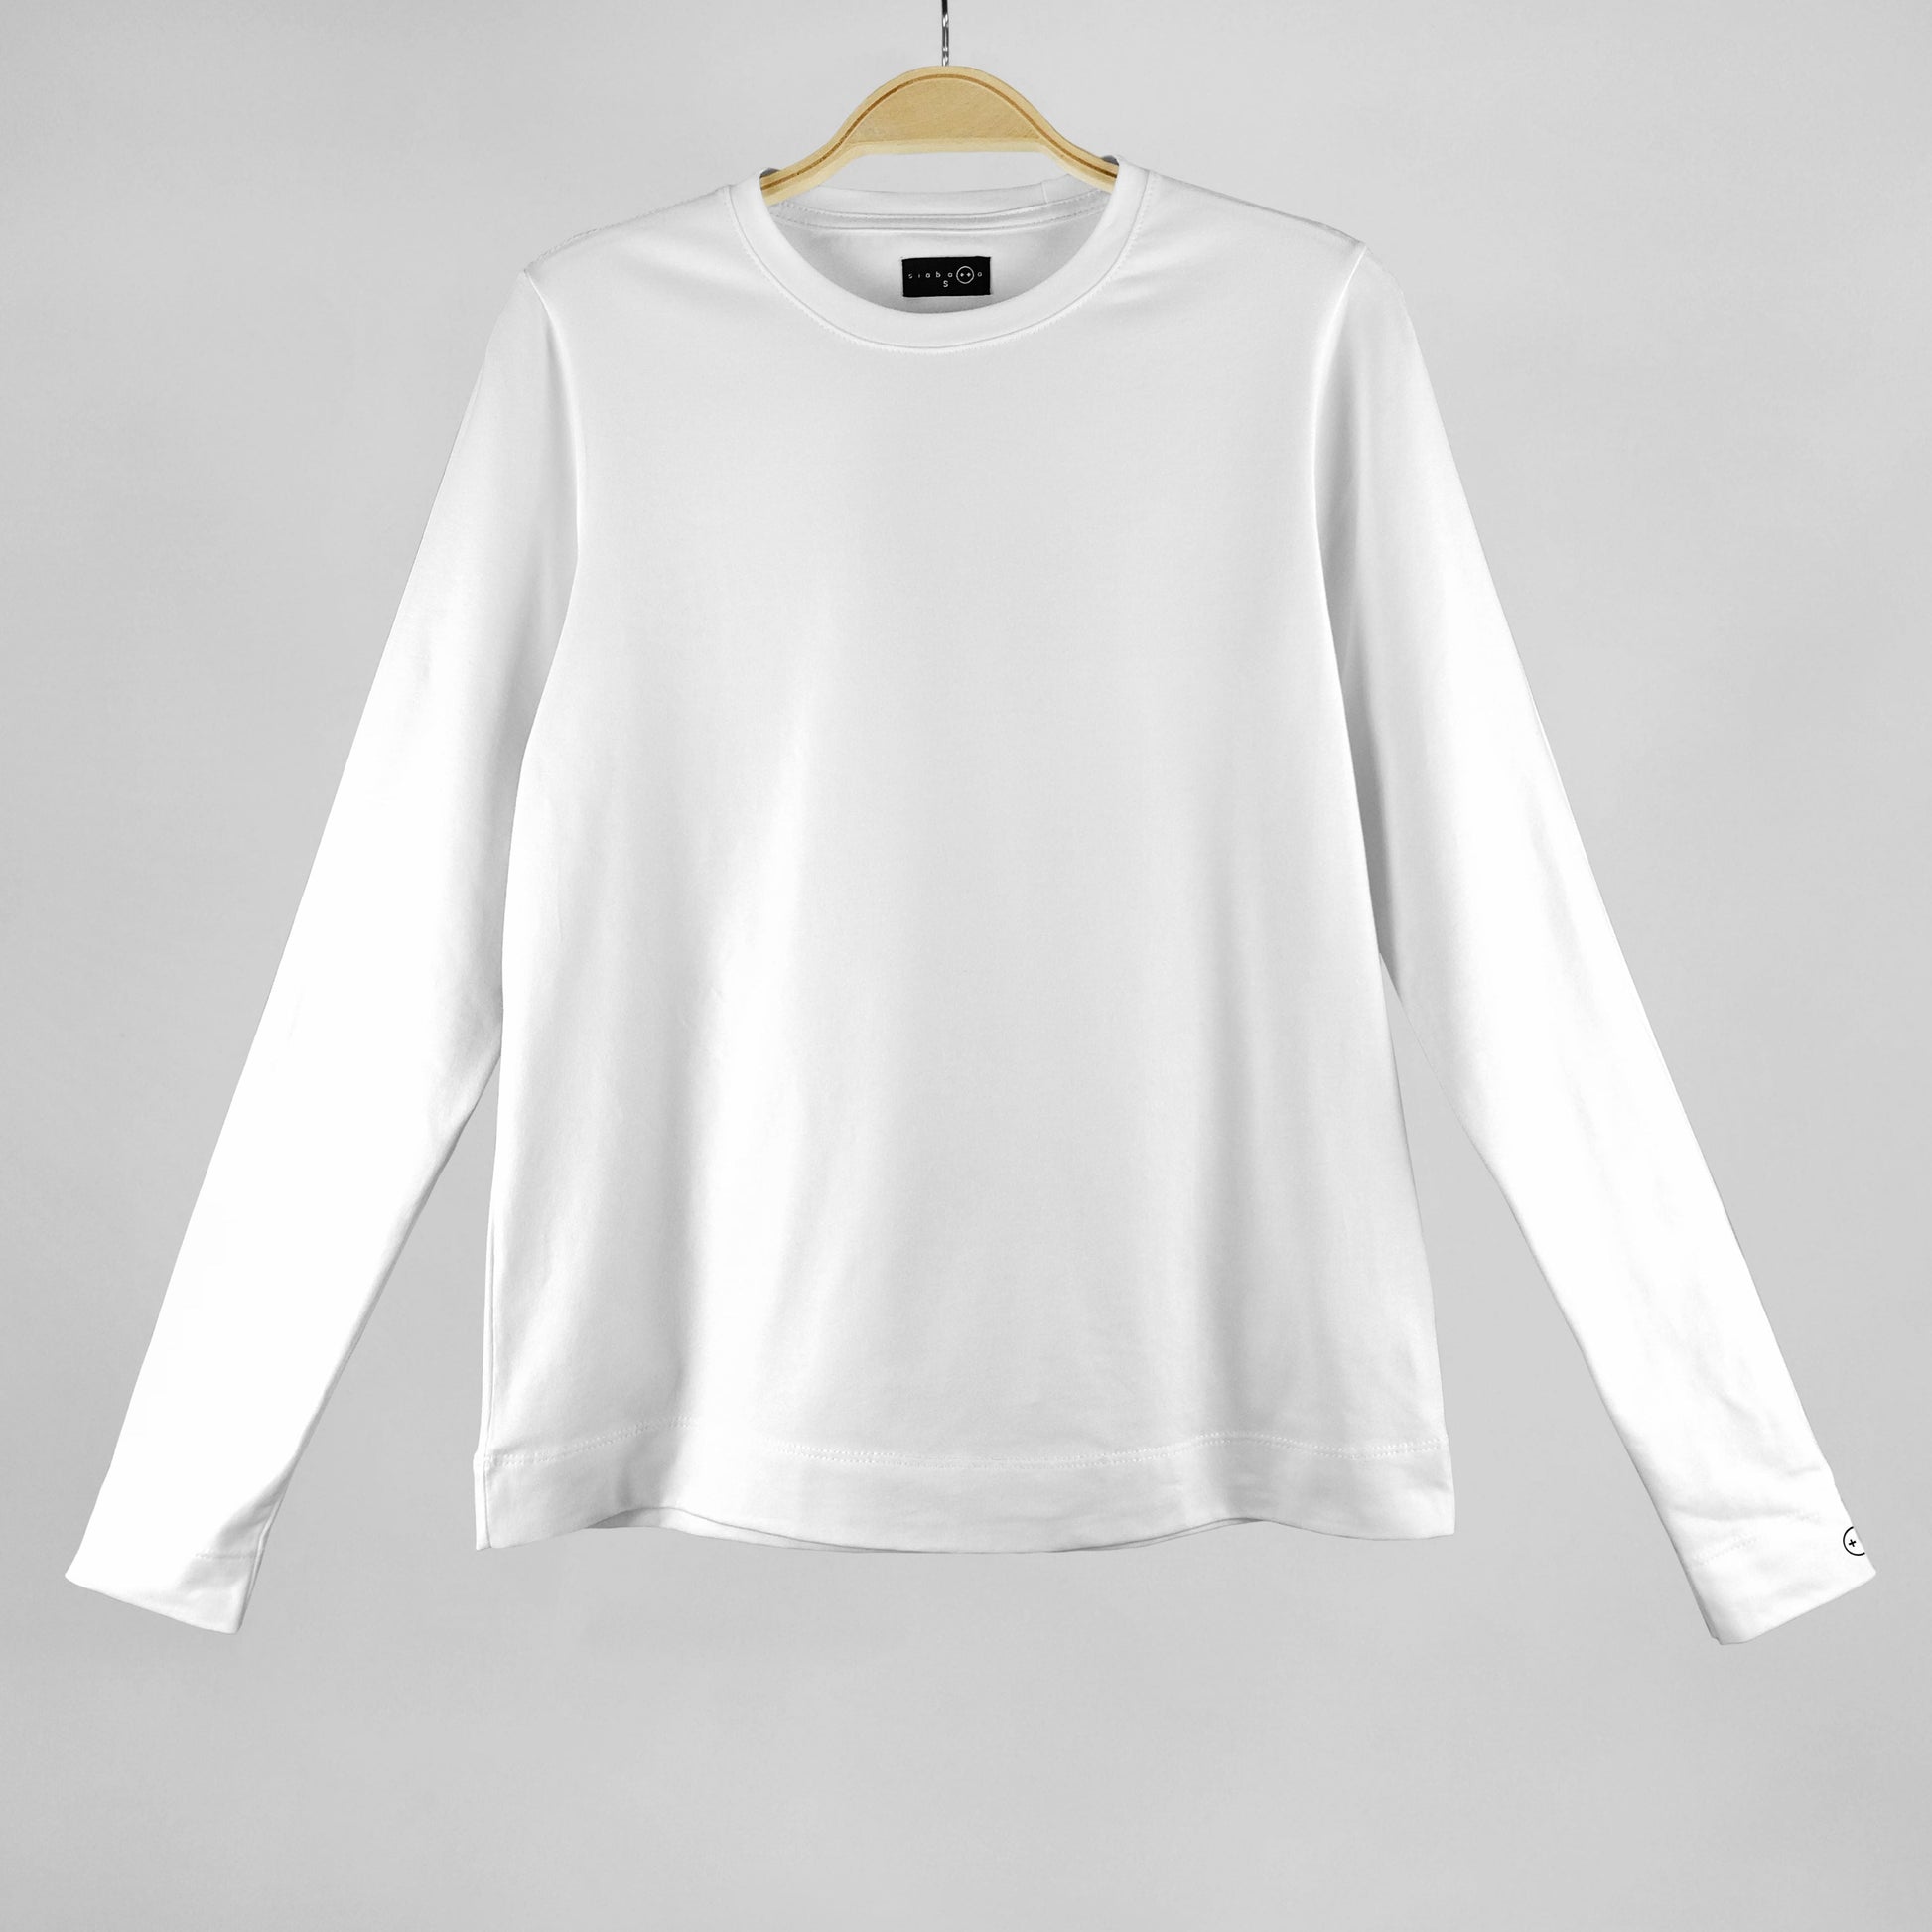 Camiseta siabatto manga larga cuello redondo color blanco